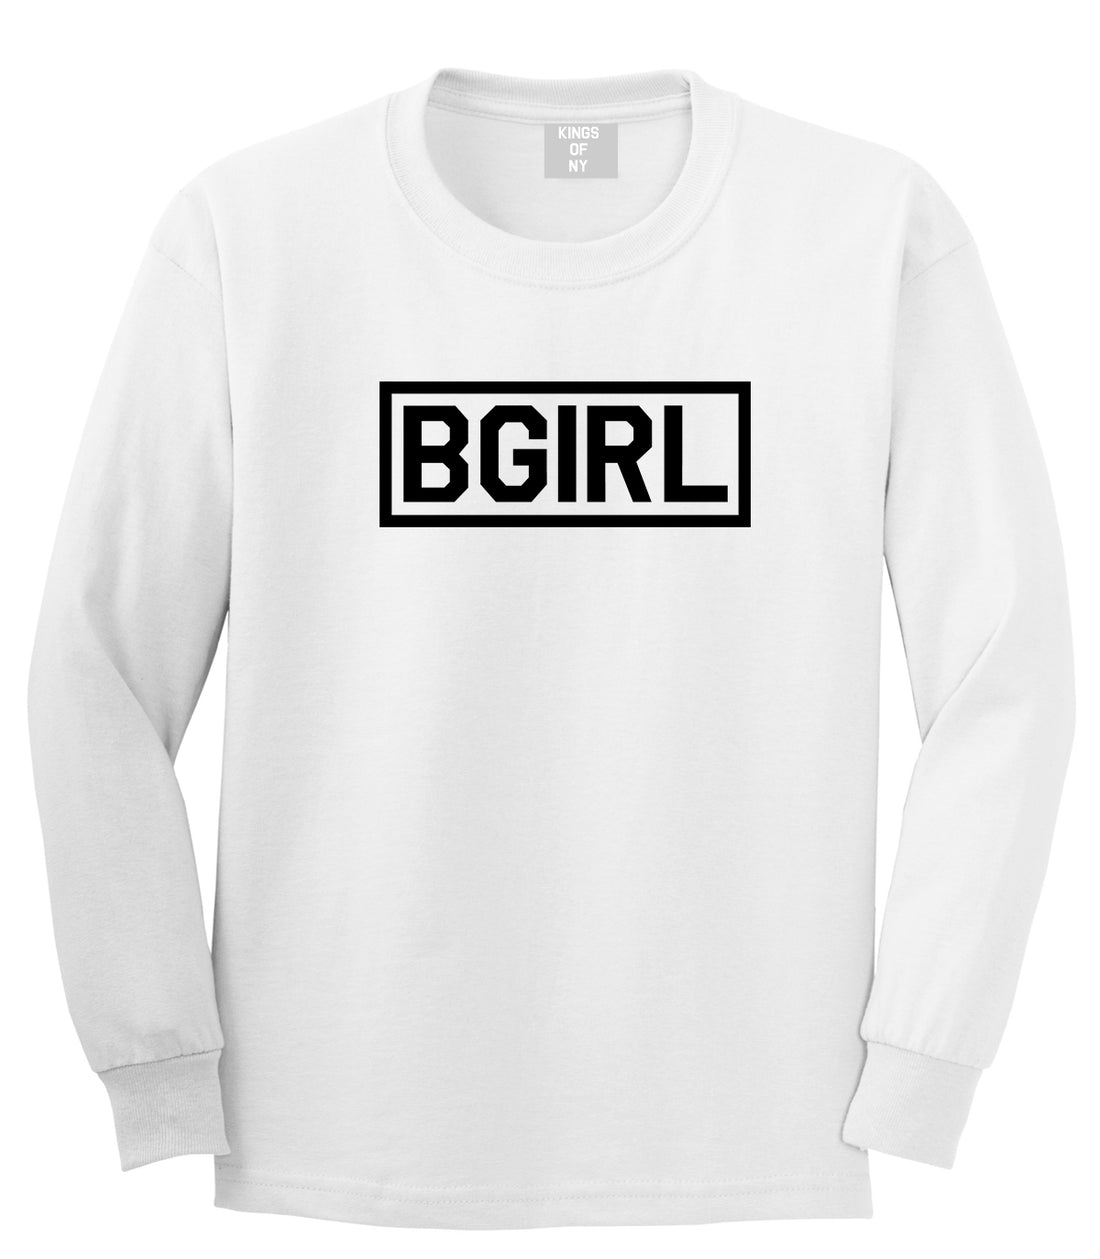 Bgirl Breakdancing White Long Sleeve T-Shirt by Kings Of NY